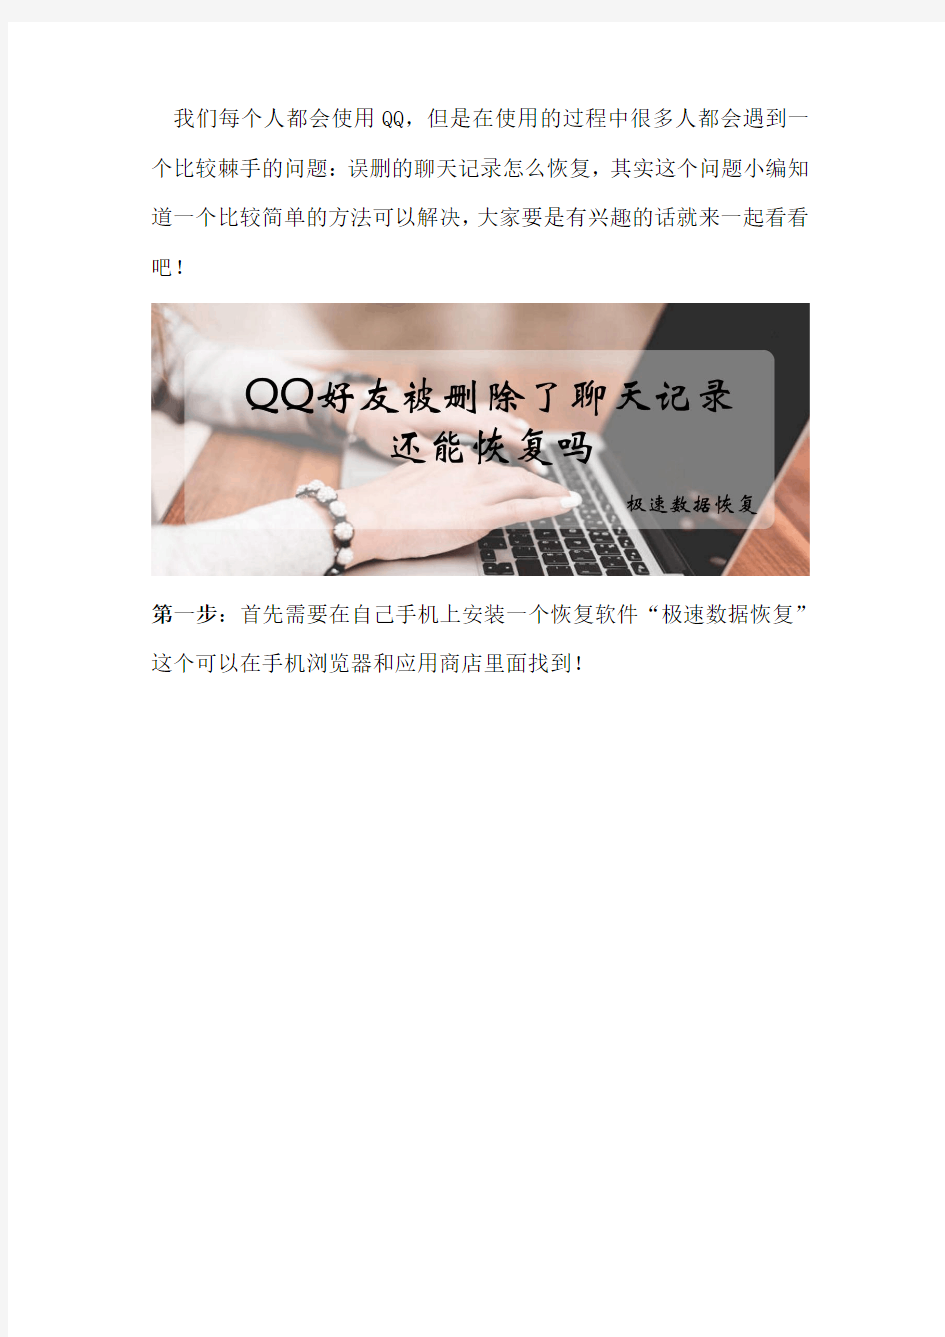 QQ好友被删除了聊天记录还能恢复吗